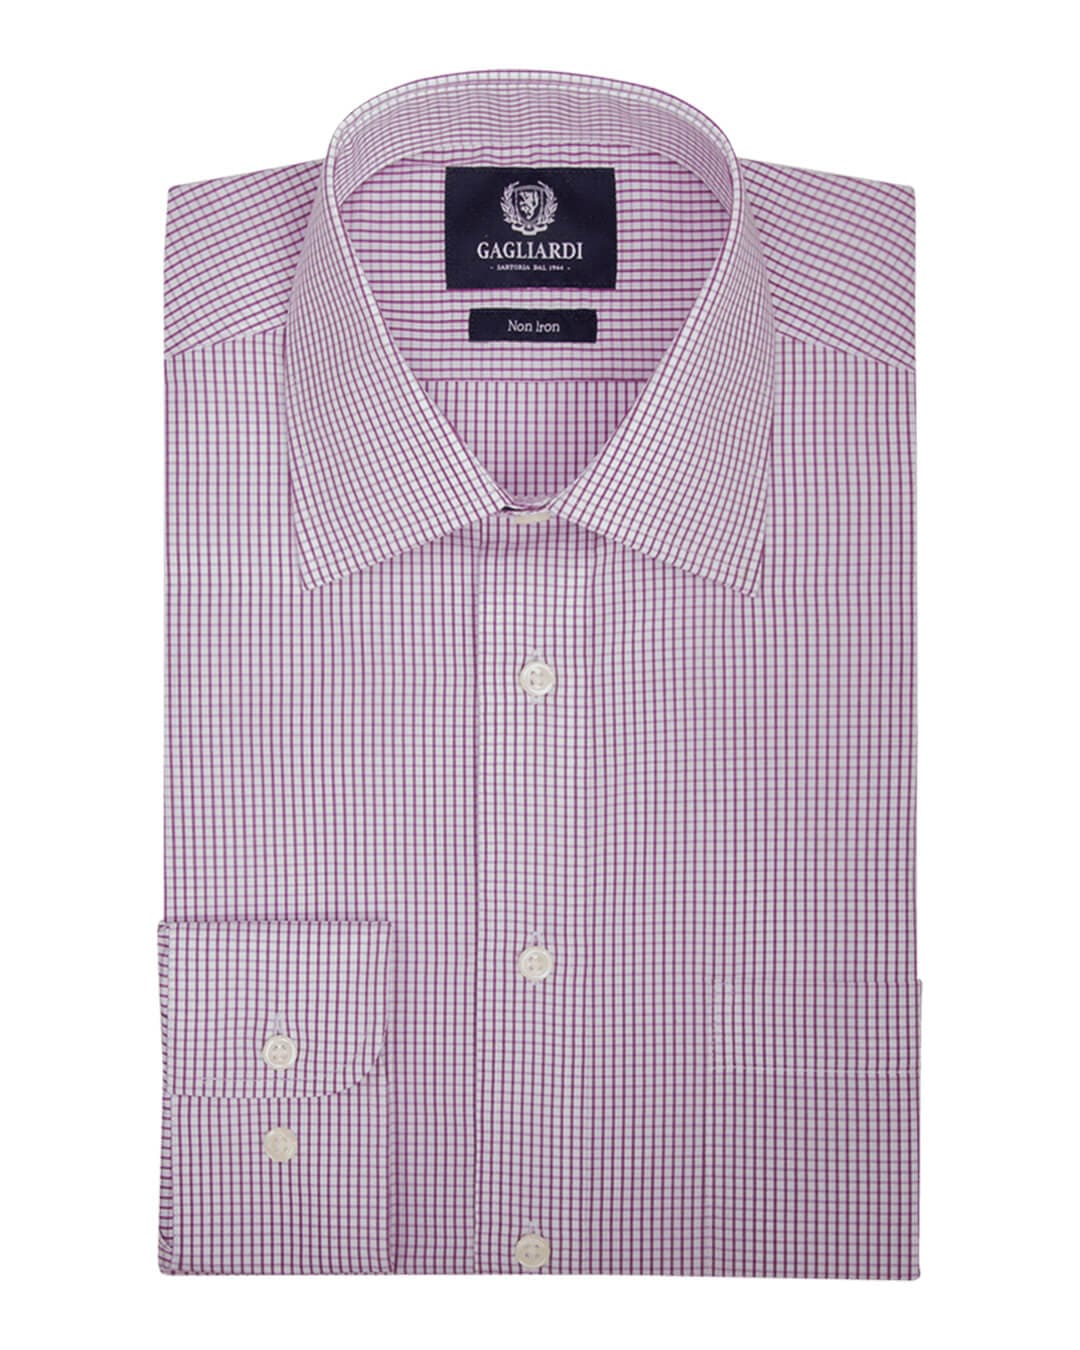 Gagliardi Shirts Gagliardi Lilac Check Tailored Fit Classic Collar Shirt